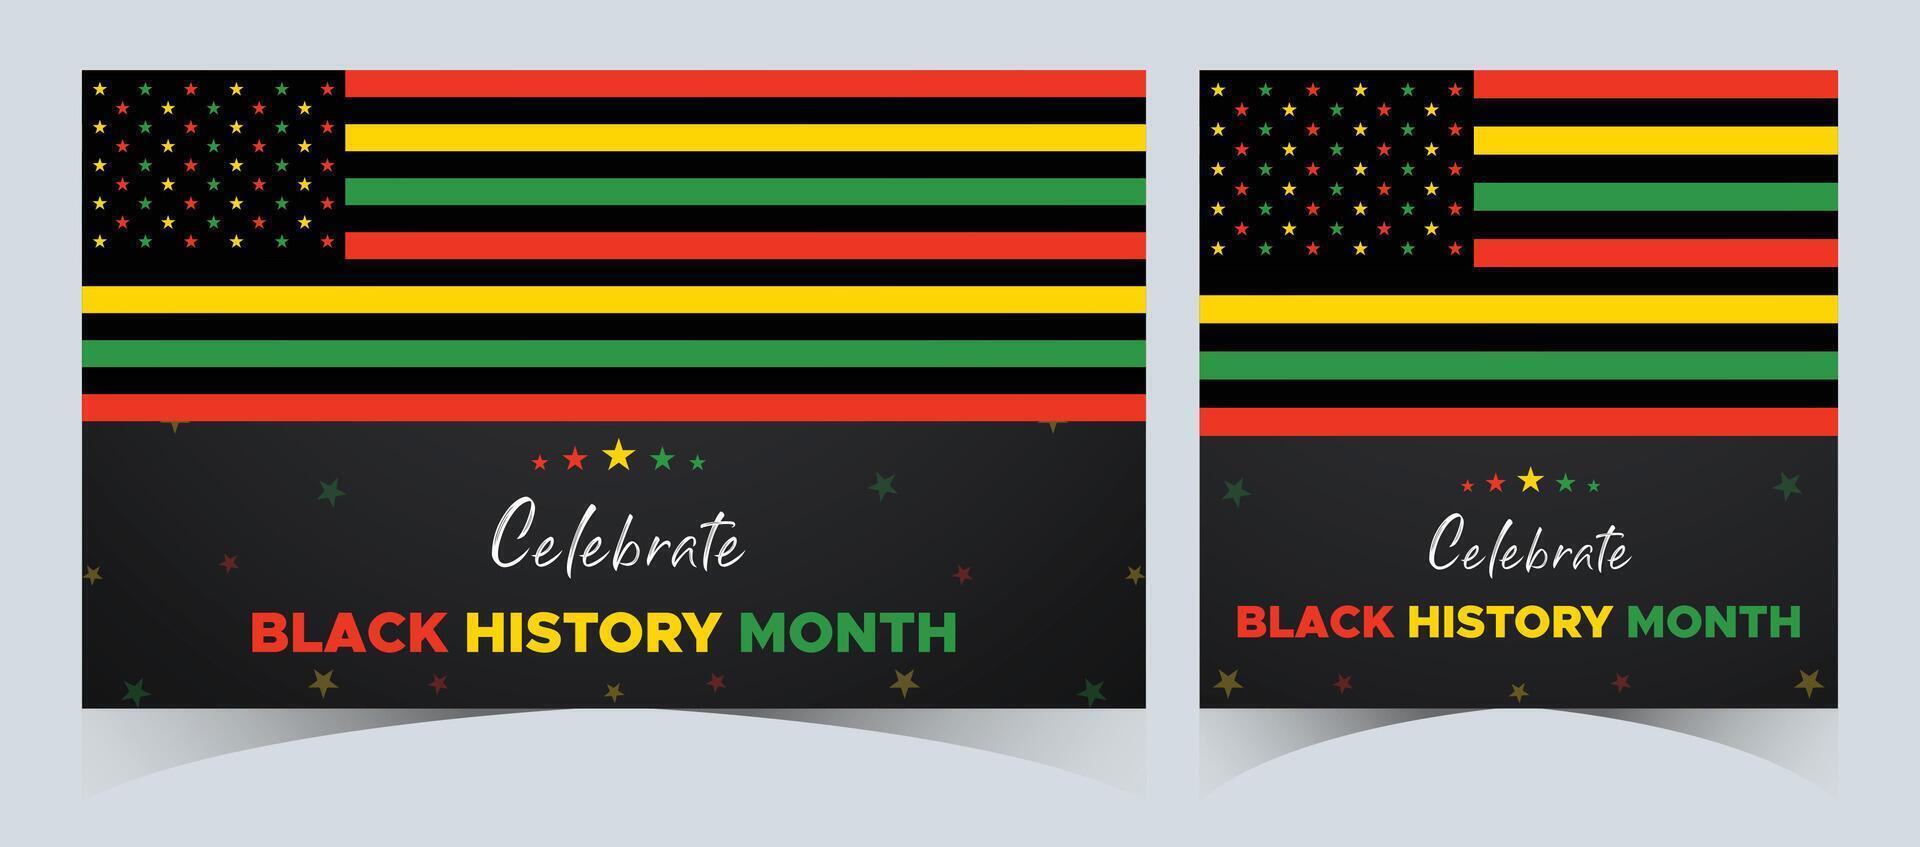 conjunto de negro historia mes celebrado. febrero nacional negro historia mes africano americano vector ilustración modelo para fondo, bandera, tarjeta, póster con texto inscripción